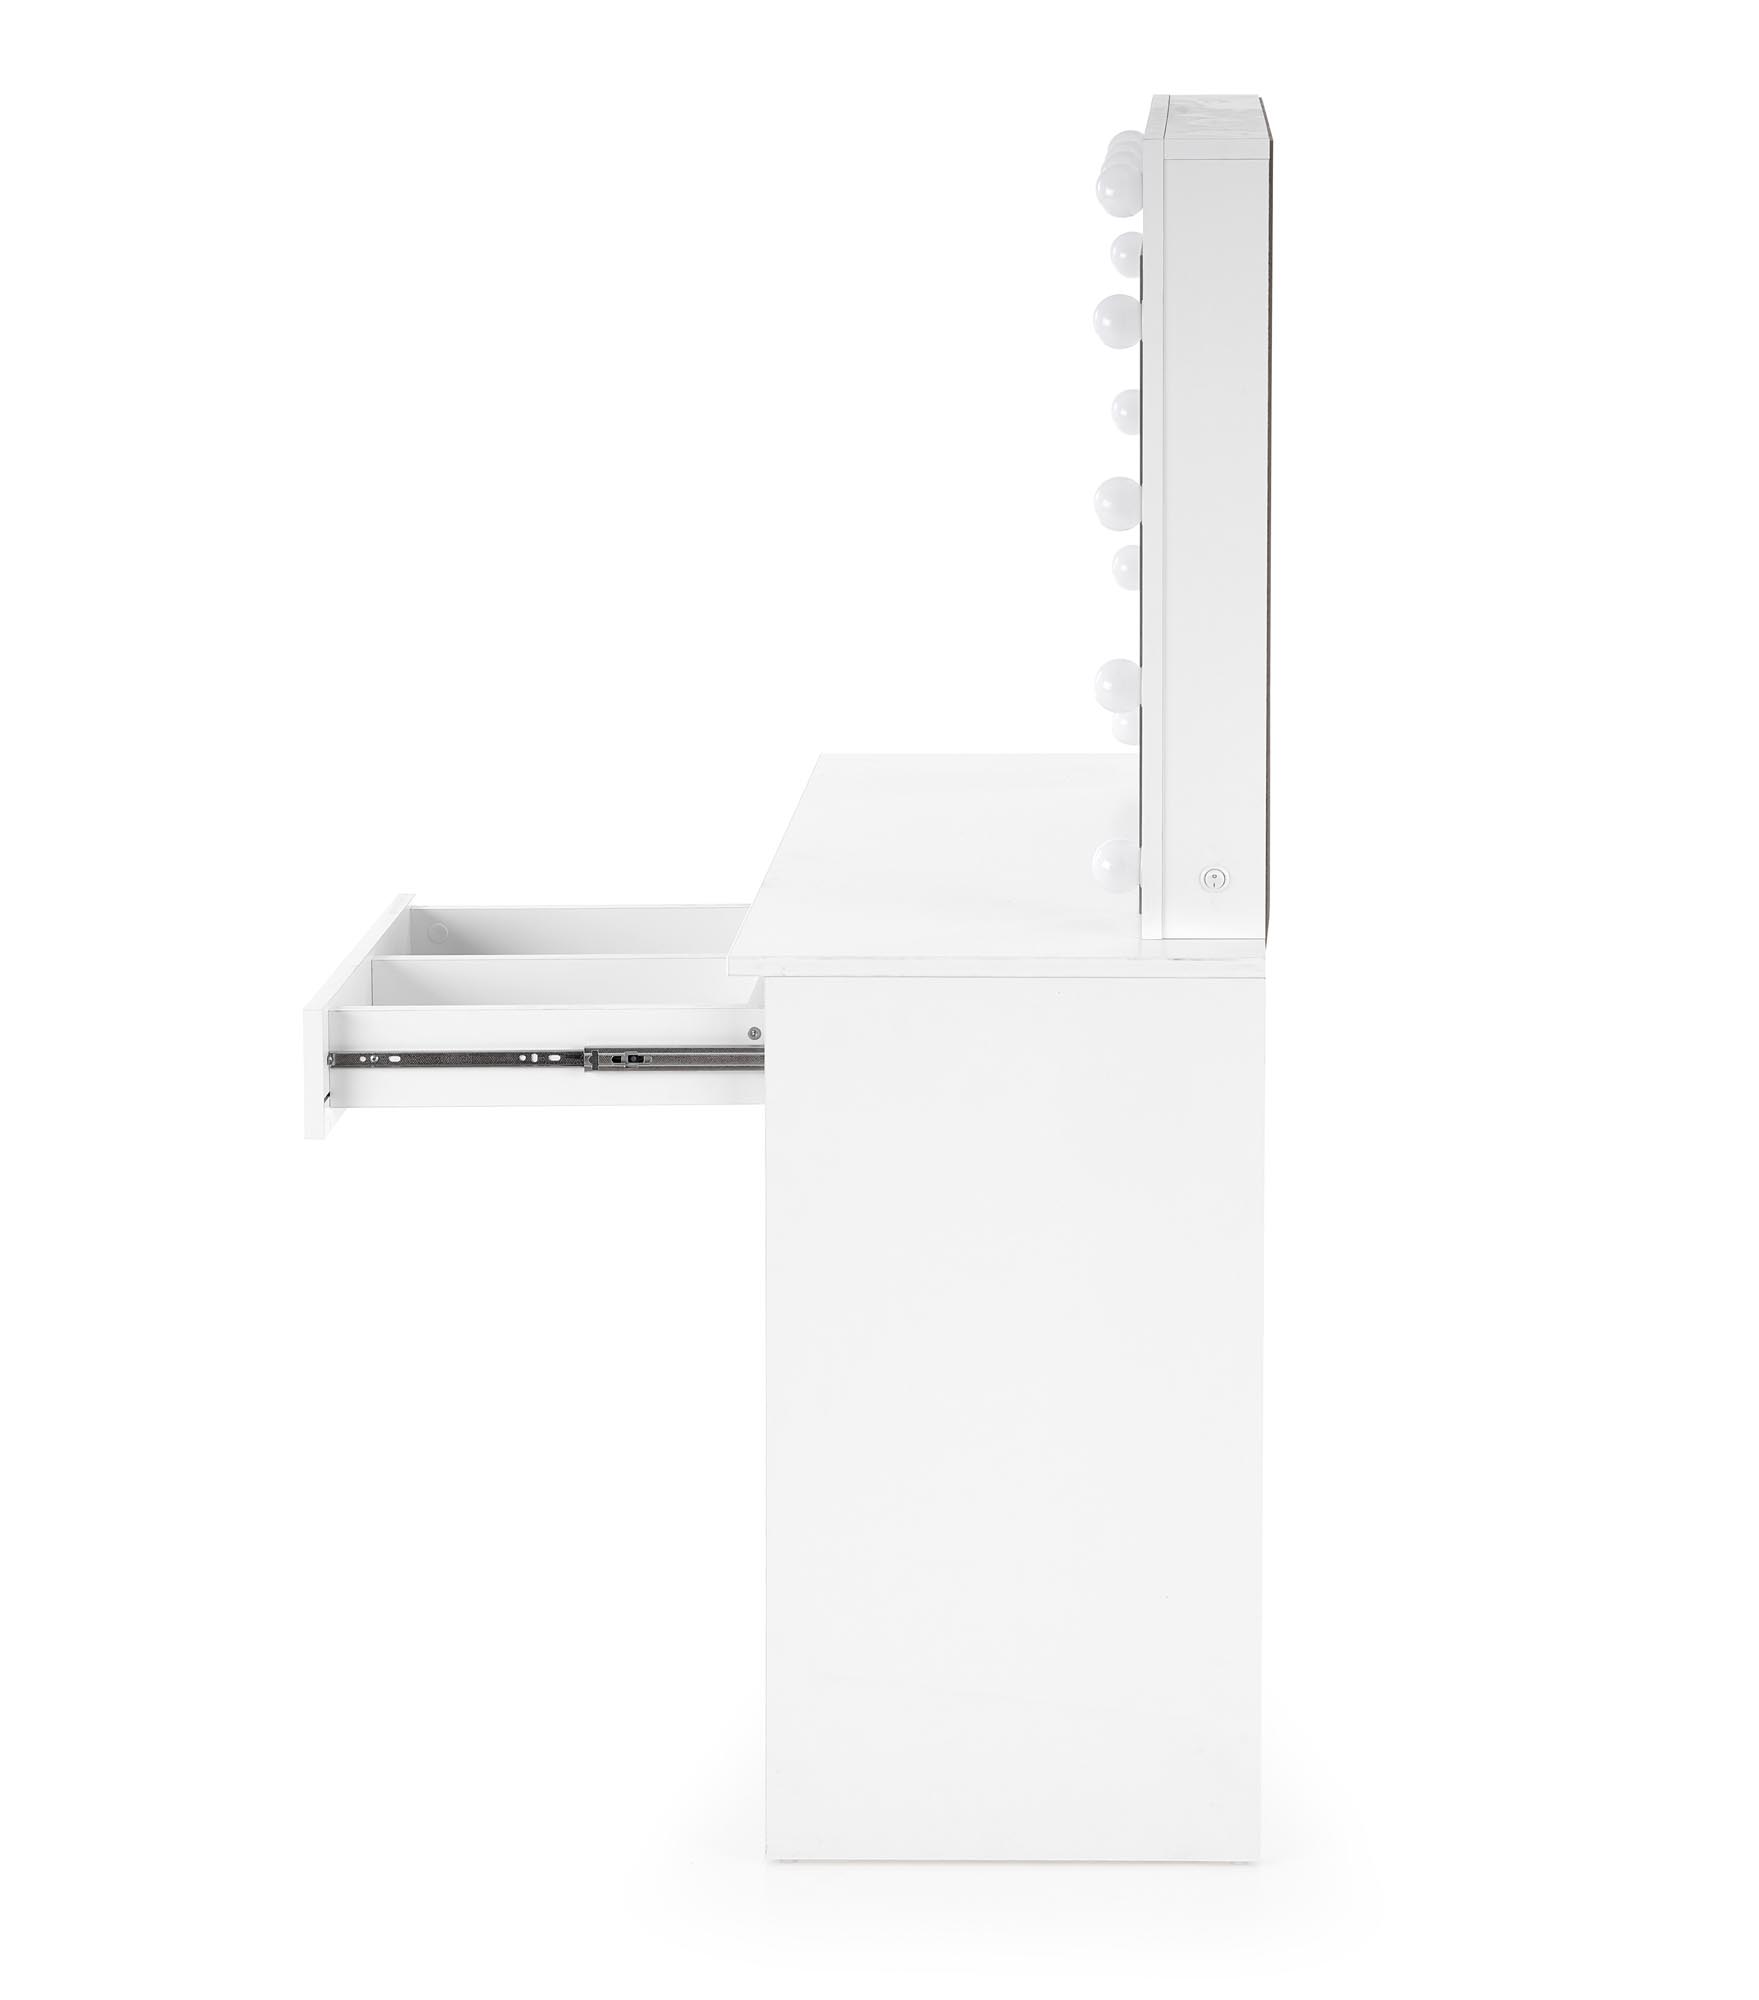 Hollywood modern sminkasztal, világítással - fehér moderní Toaletní stolek Hollywood s osvětlením - Bílý